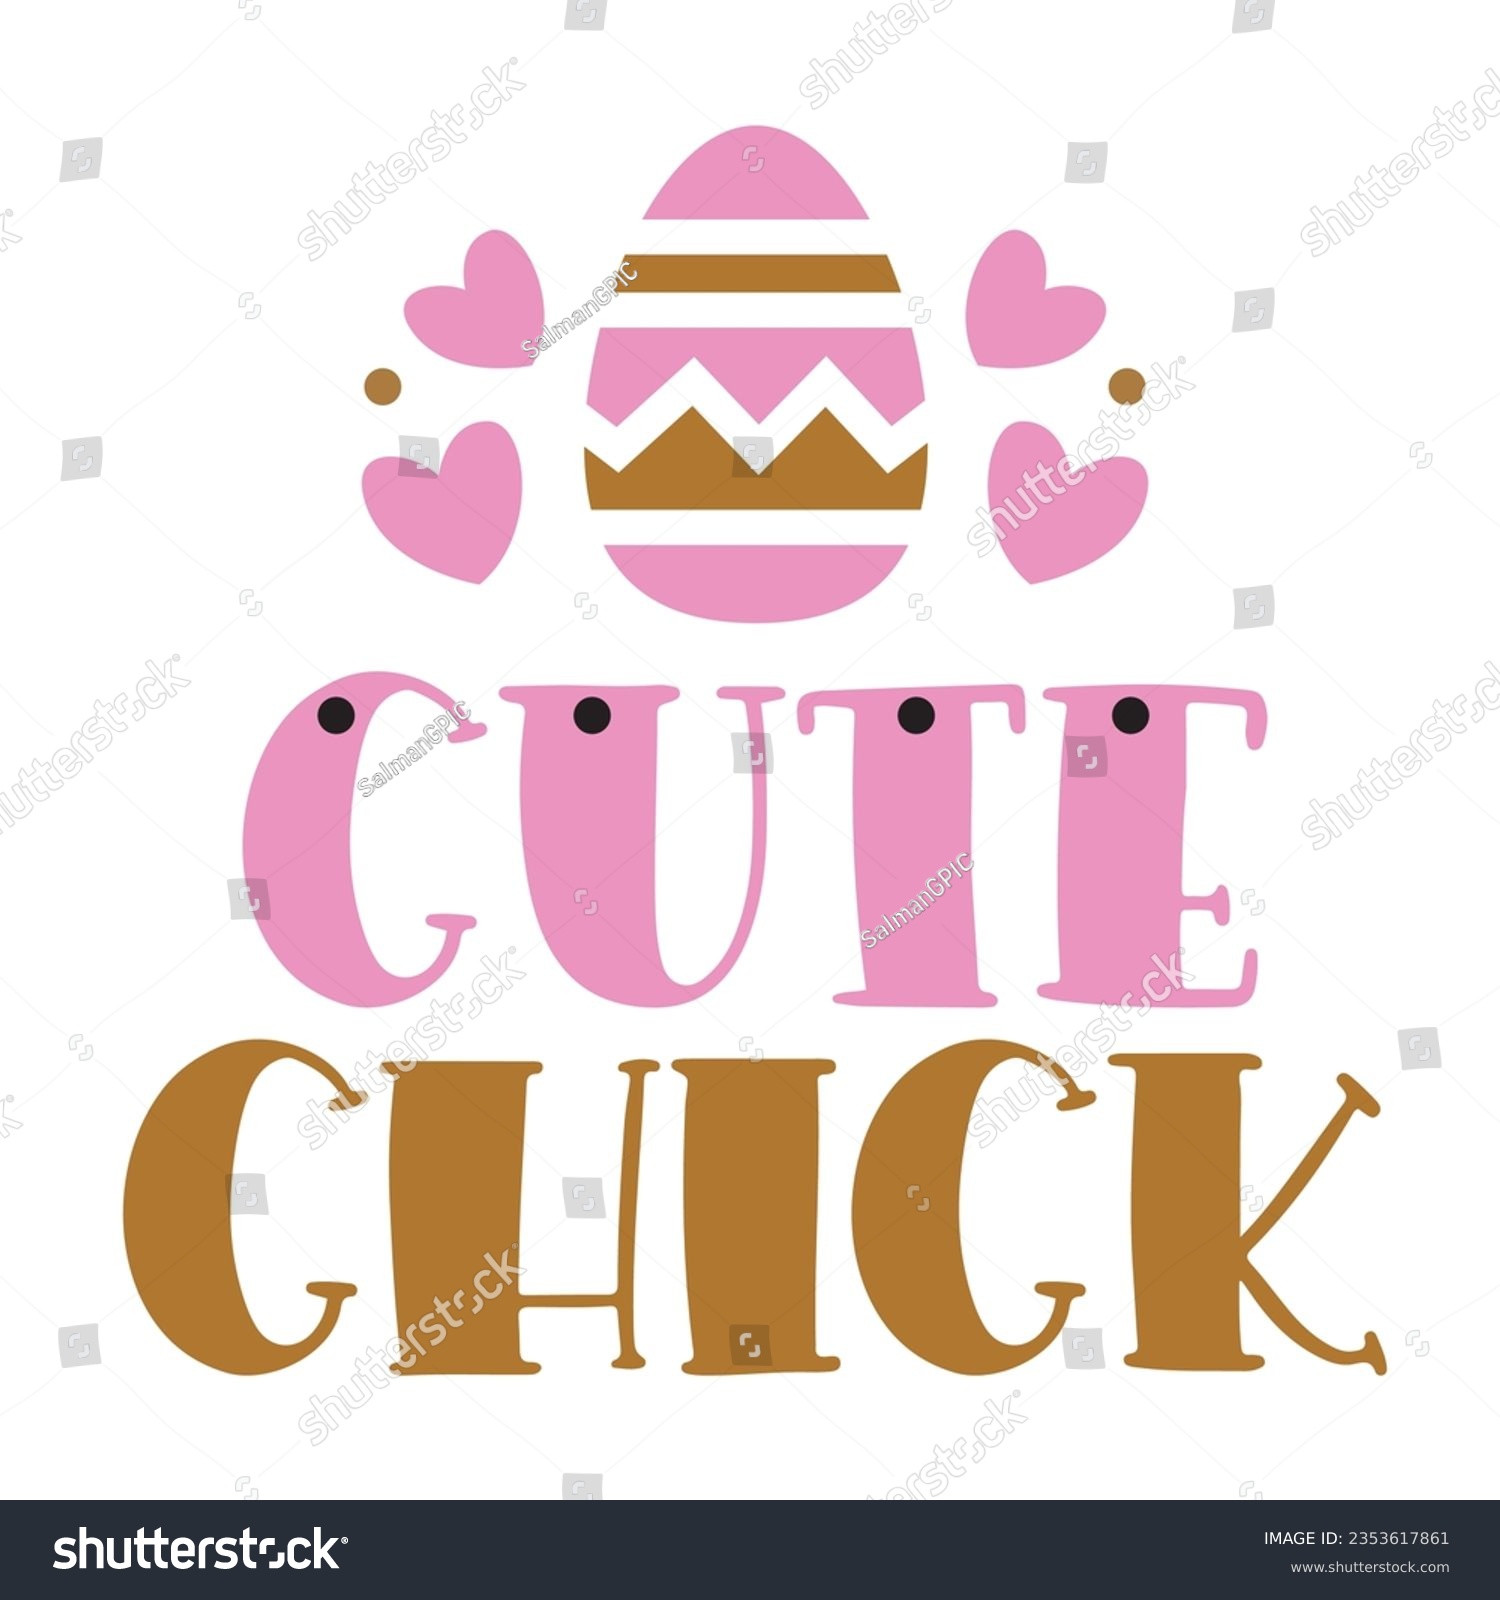 SVG of Cute Chick. Design print for t shirt, pin label, badges, sticker, greeting card, banner. Vector illustration. svg